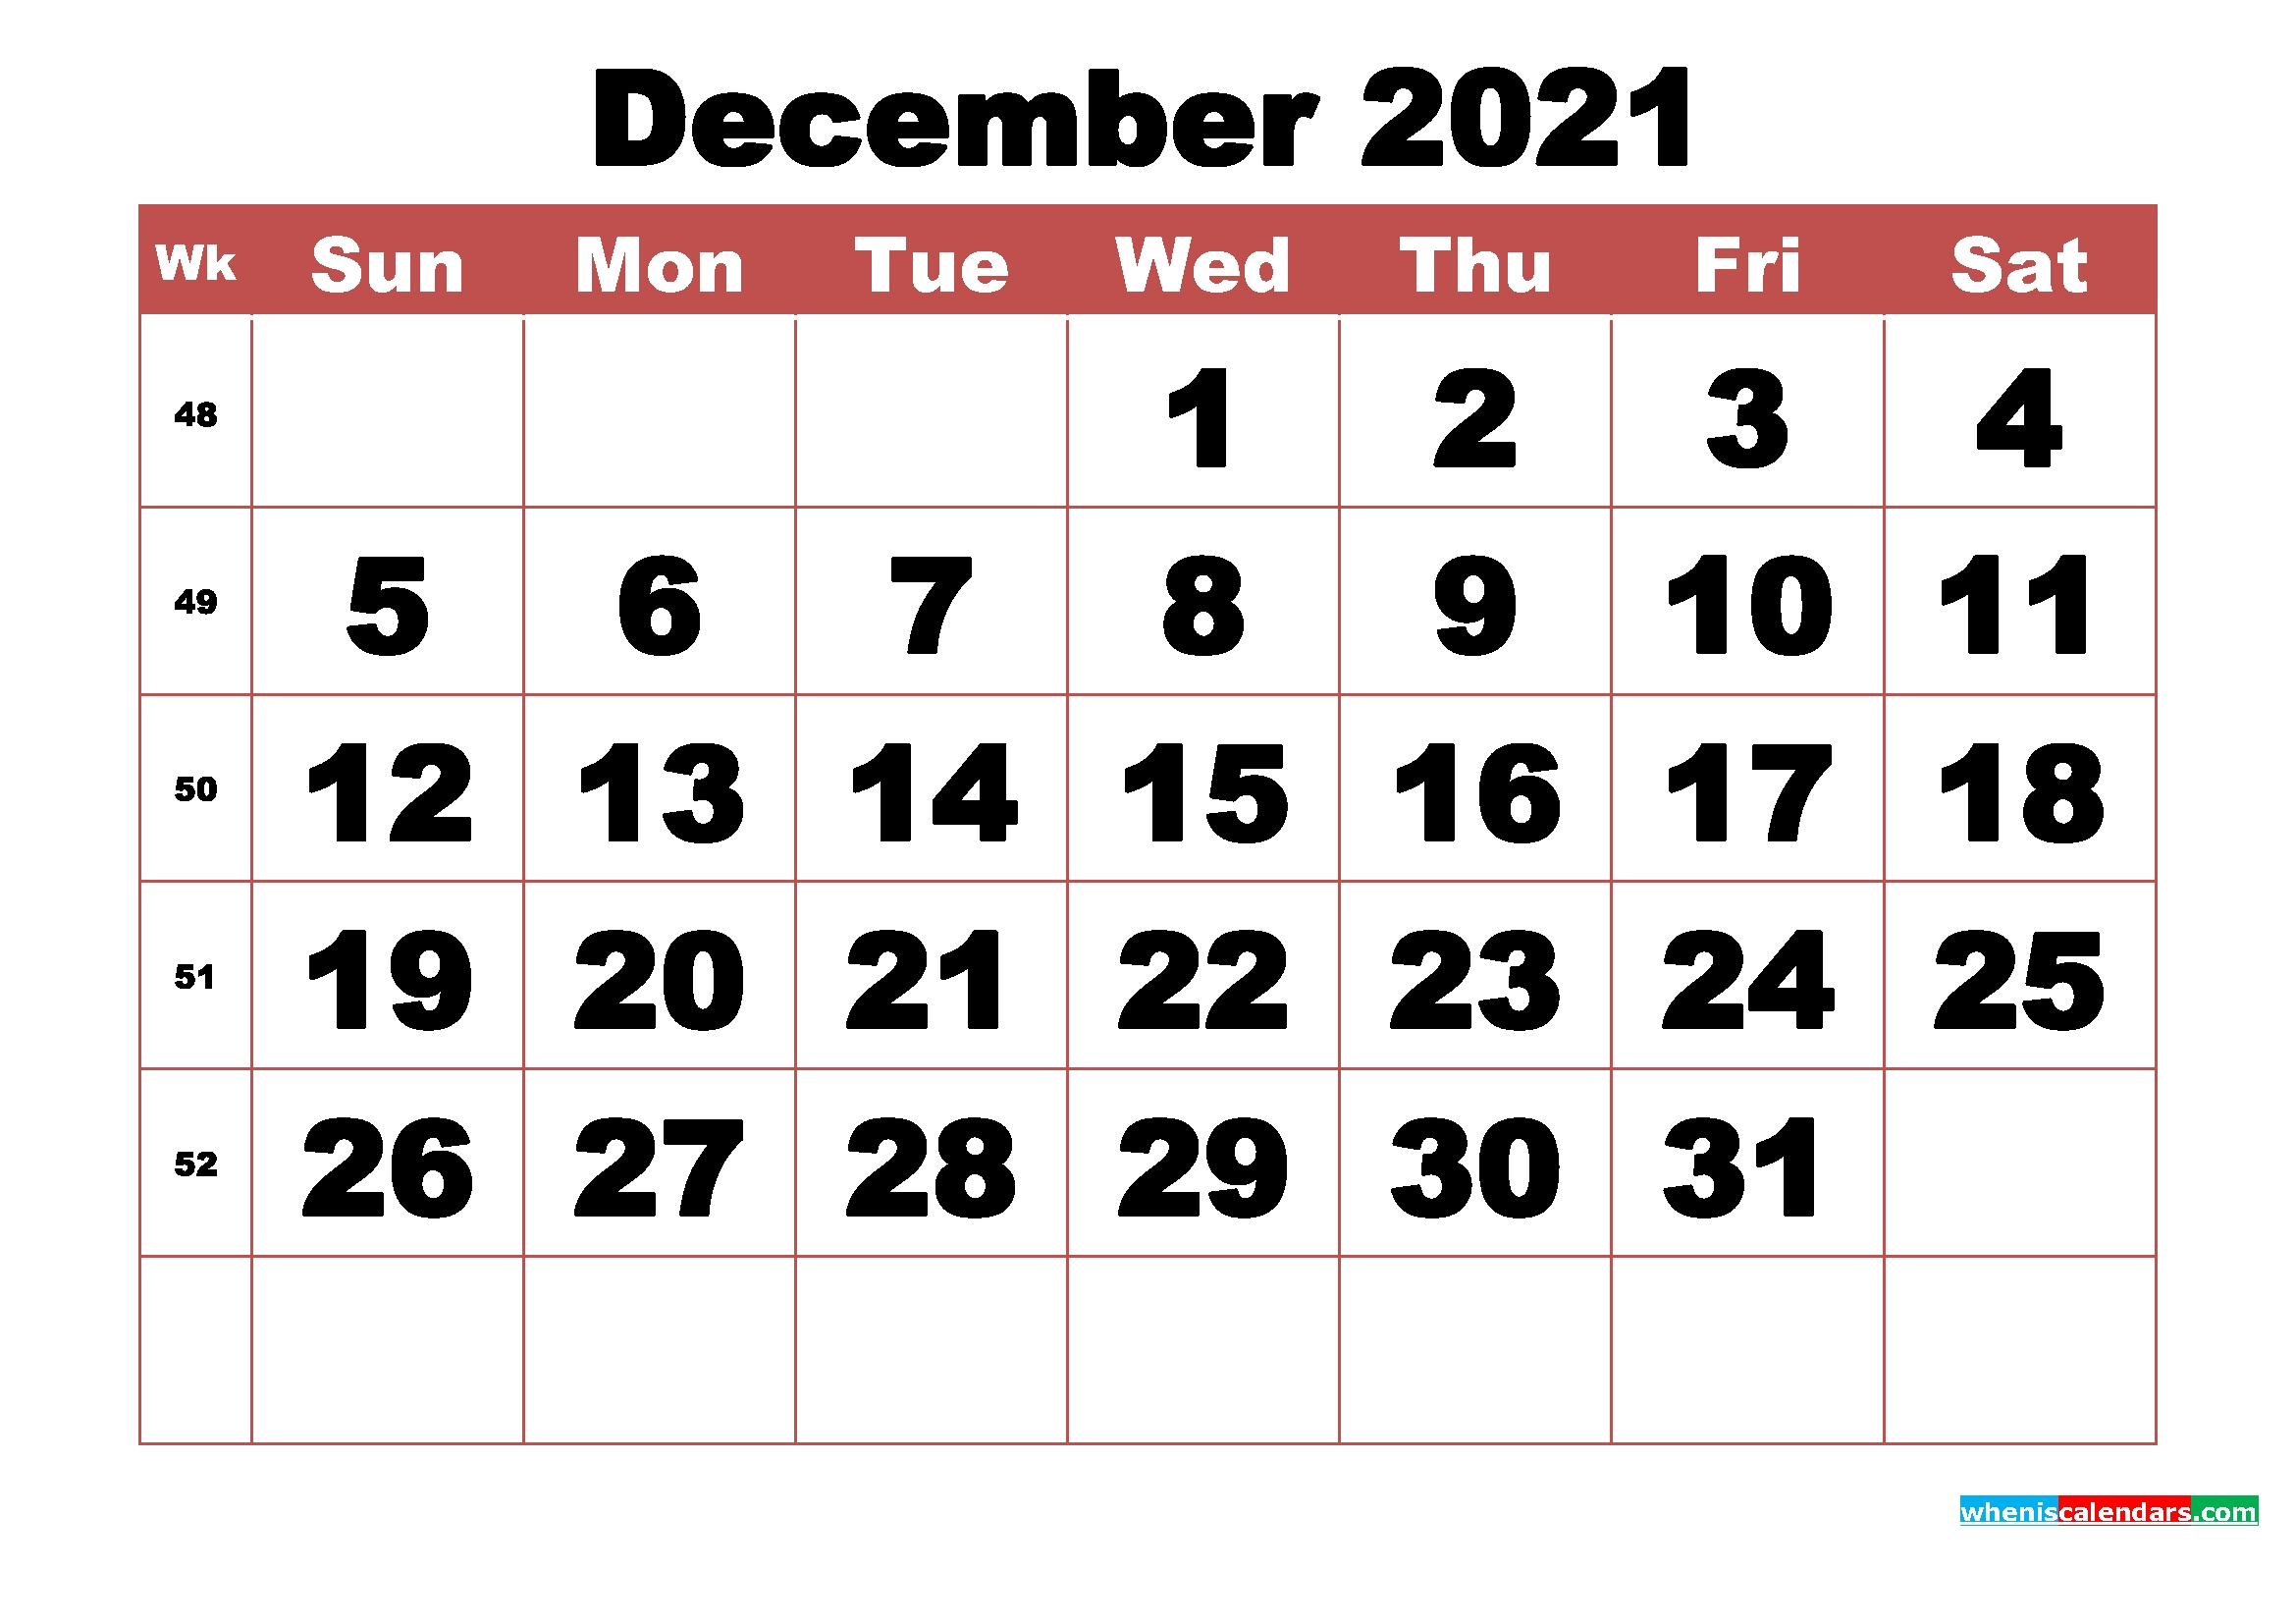 Free Printable December 2021 Calendar With Week Numbers - Free Printable 2020 Monthly Calendar December 2021 Hindu Calendar